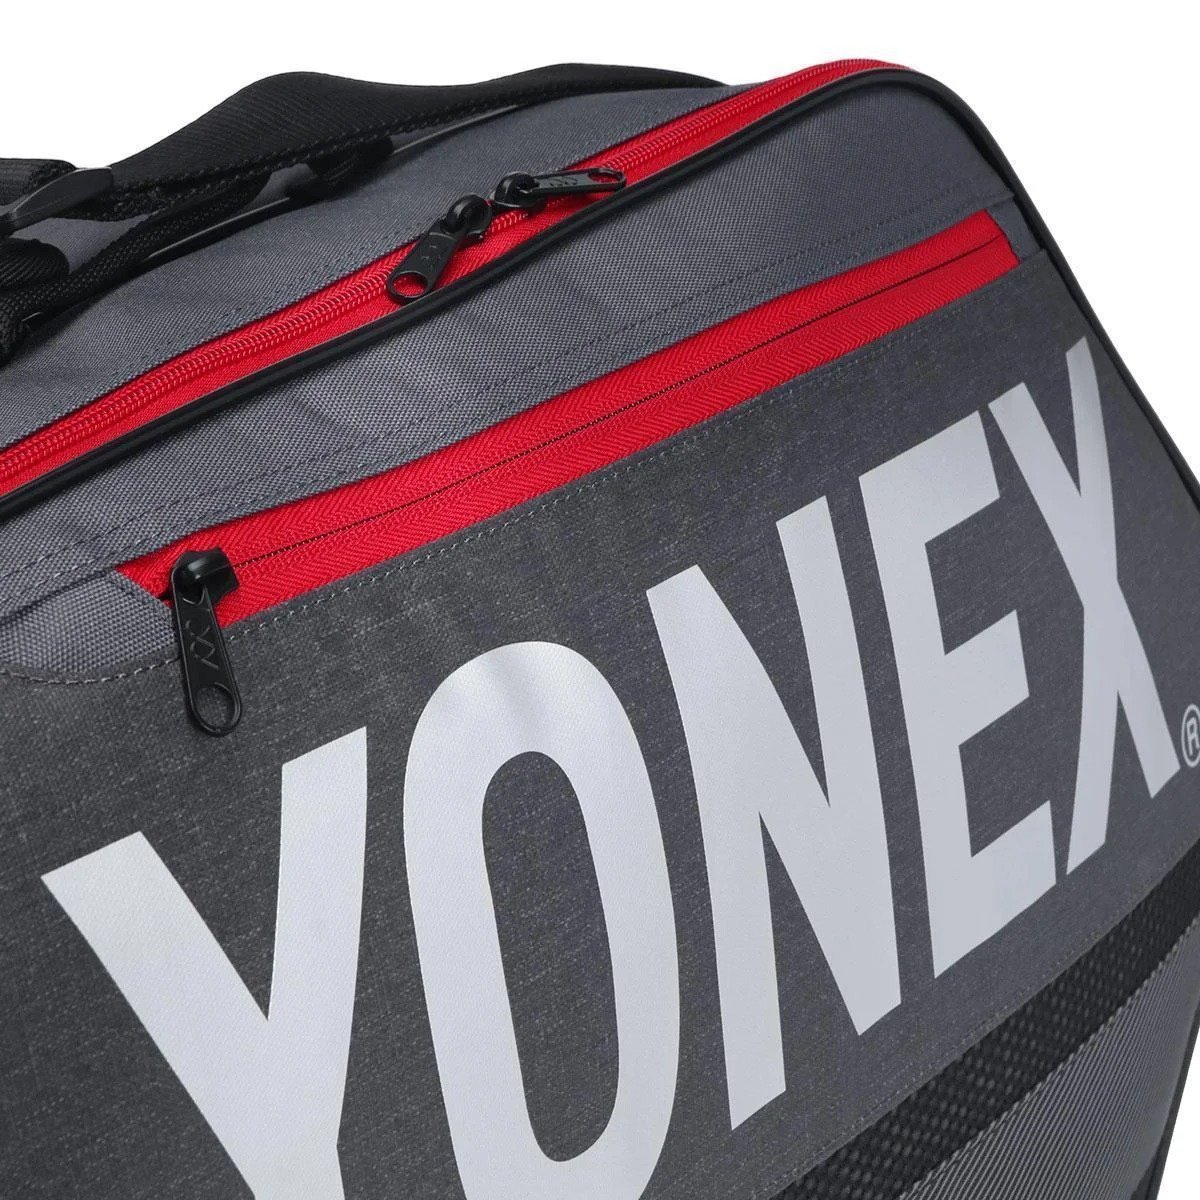 Raqueteira Yonex Team X6 - 5